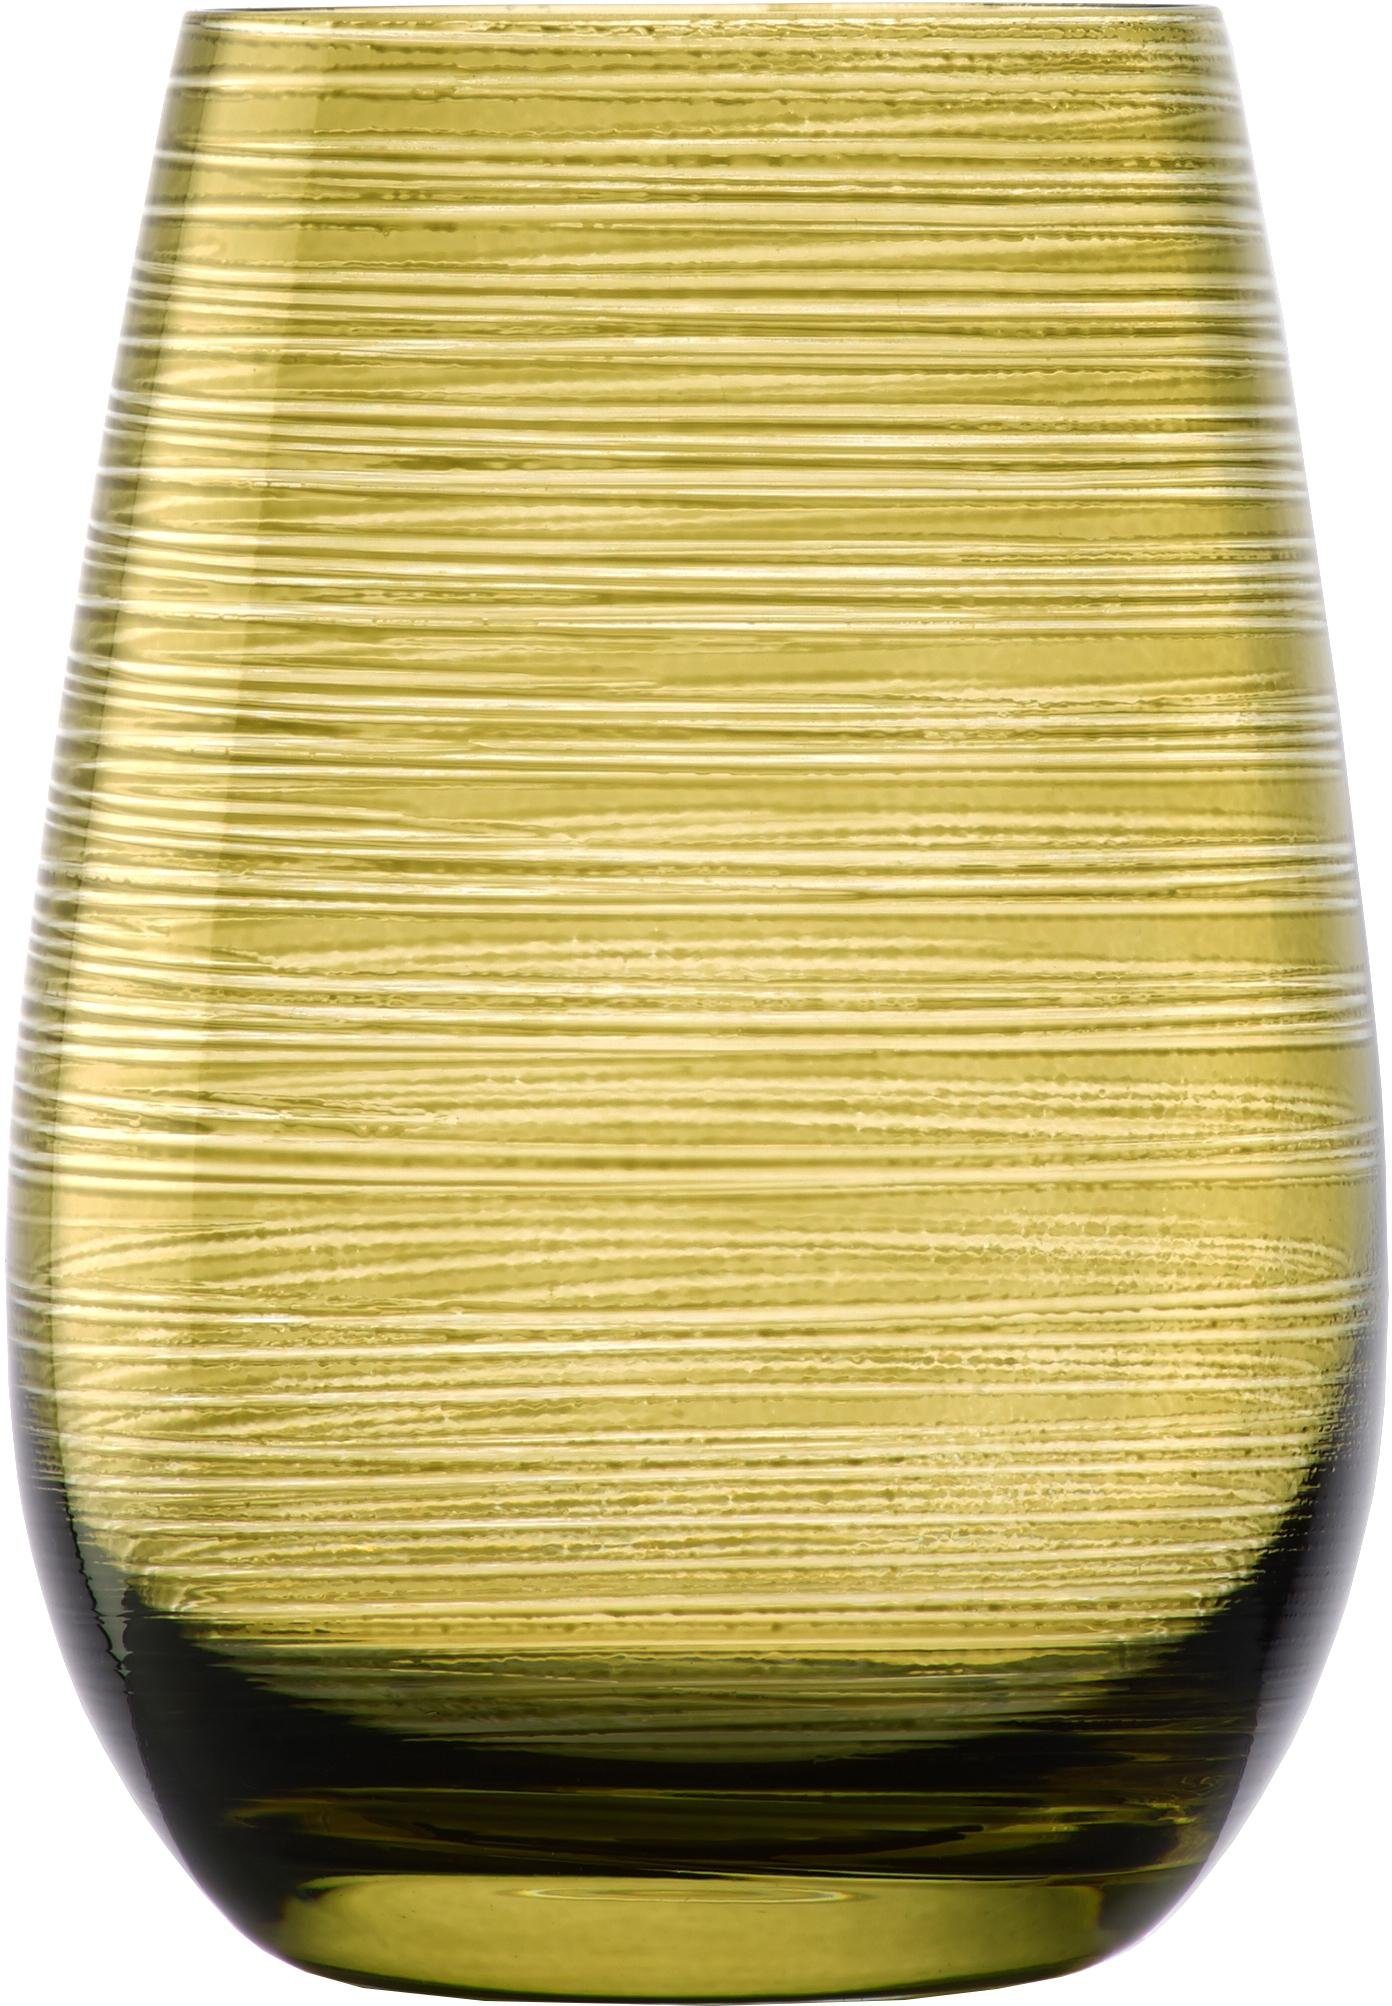 Stölzle Glas, Becher olivgrün 6-teilig TWISTER,